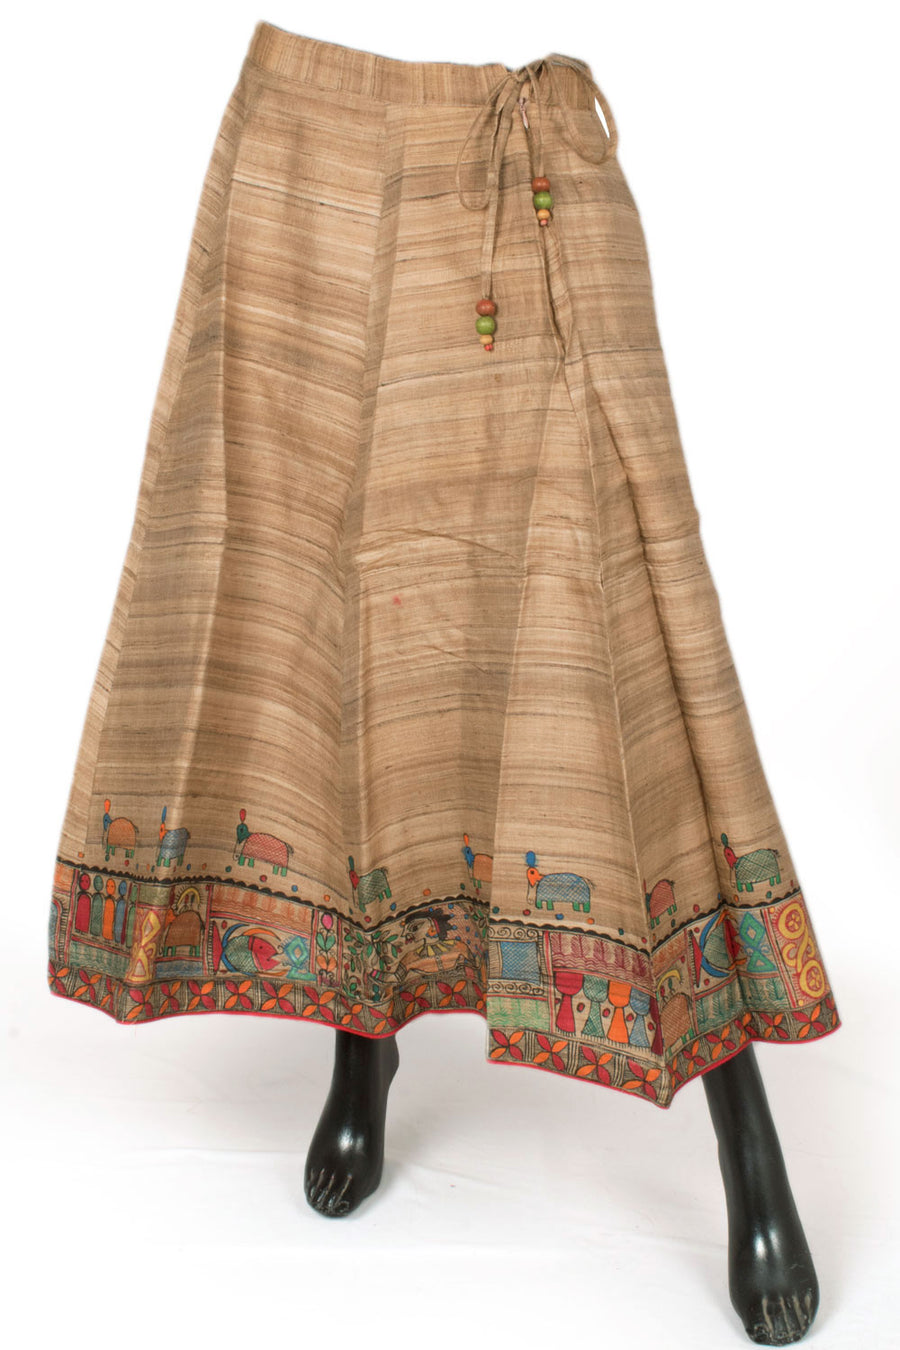 Hand Painted Madhubani Bhagalpur Tussar Silk Skirt with Godna Art Work